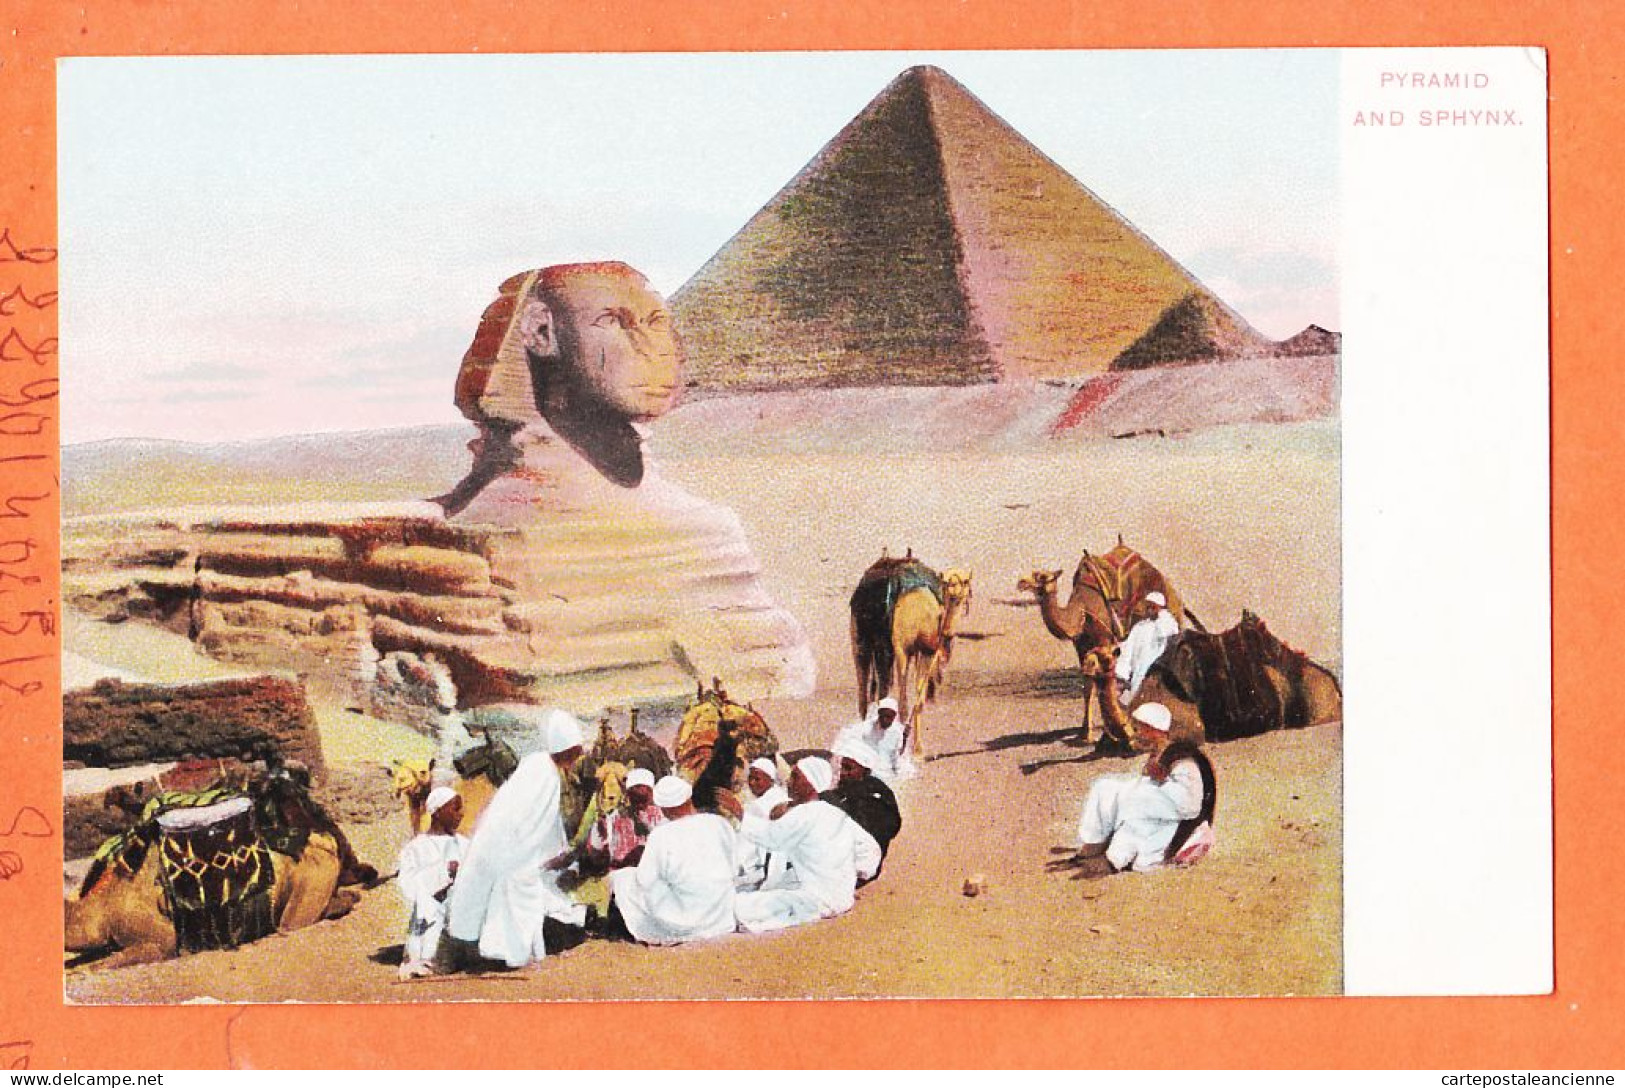 17355 / ⭐ ◉ Lichtenstern & Harari N° 20 Cairo ◉ Pyramid And Sphynx ◉ GIZEH Pyramide Et Sphinx 1905s ◉ Egypte Egypt  - Sfinge